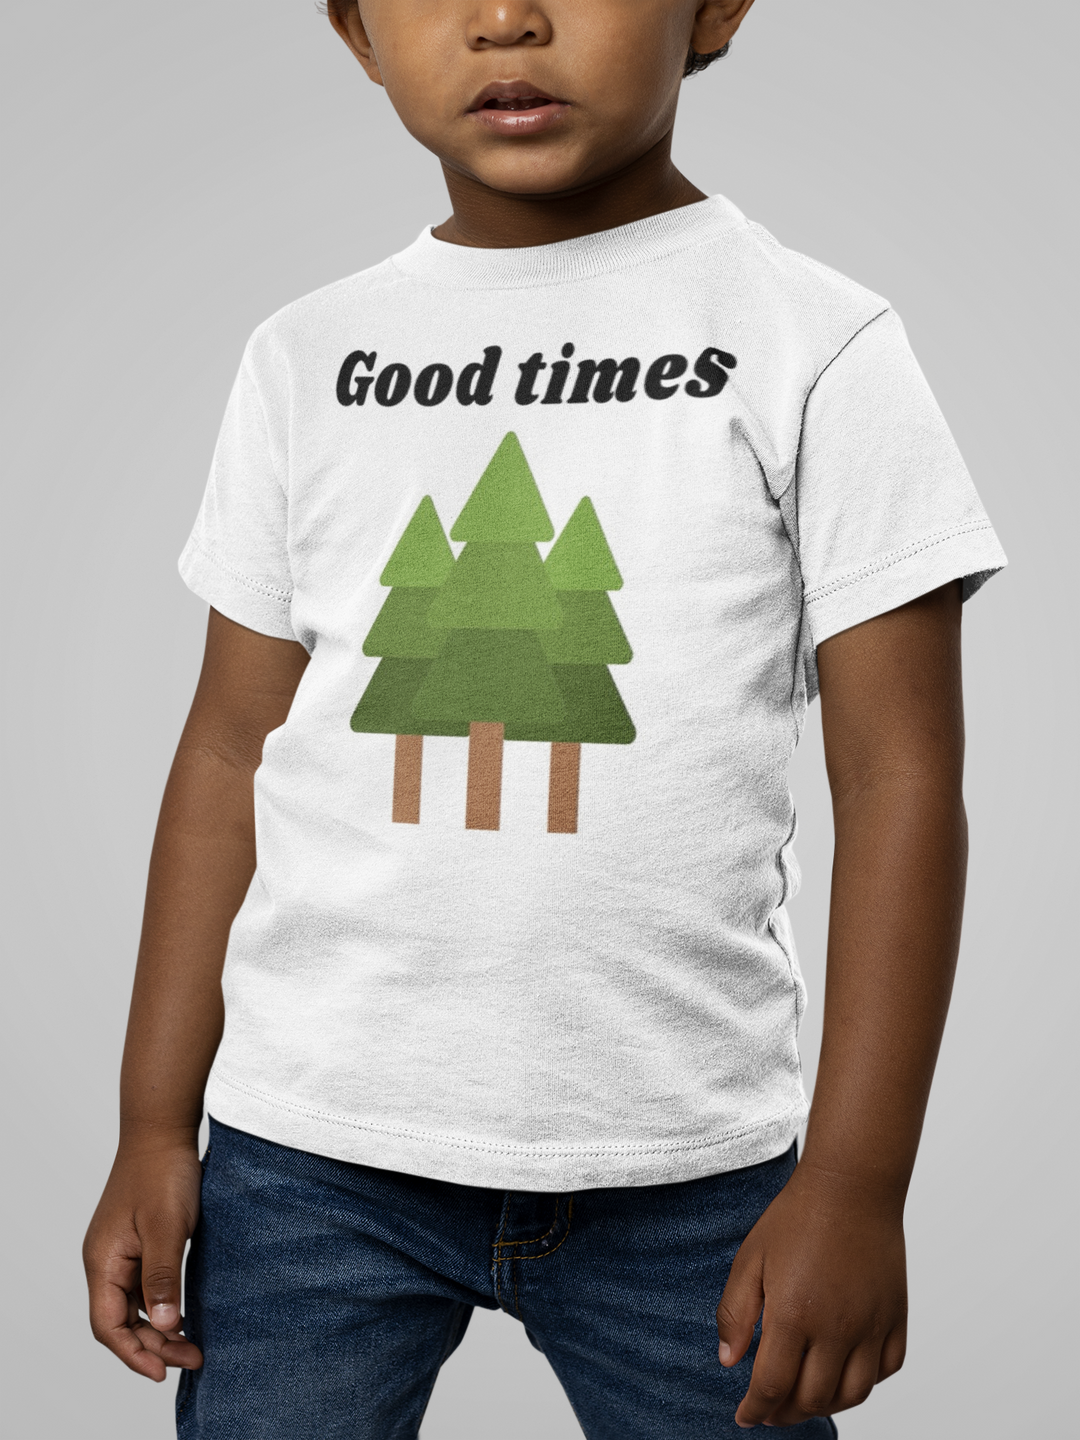 Good Times. Short Sleeve T Shirt For Toddler And Kids. - TeesForToddlersandKids -  t-shirt - camping - good-times-short-sleeve-t-shirt-for-toddler-and-kids